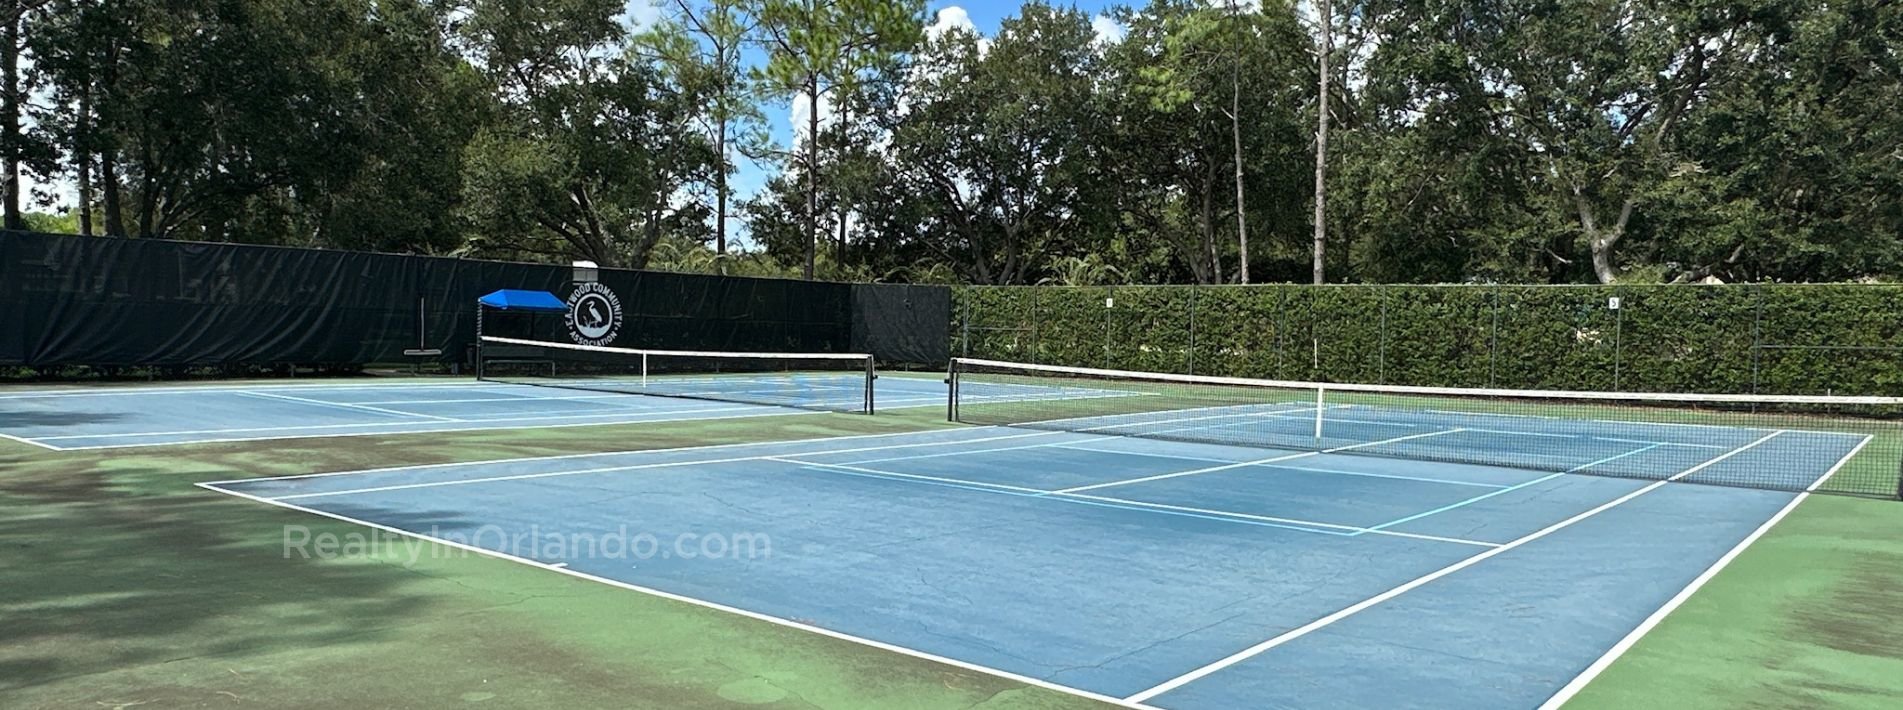 Eastwood Orlando Community Tennis Courts